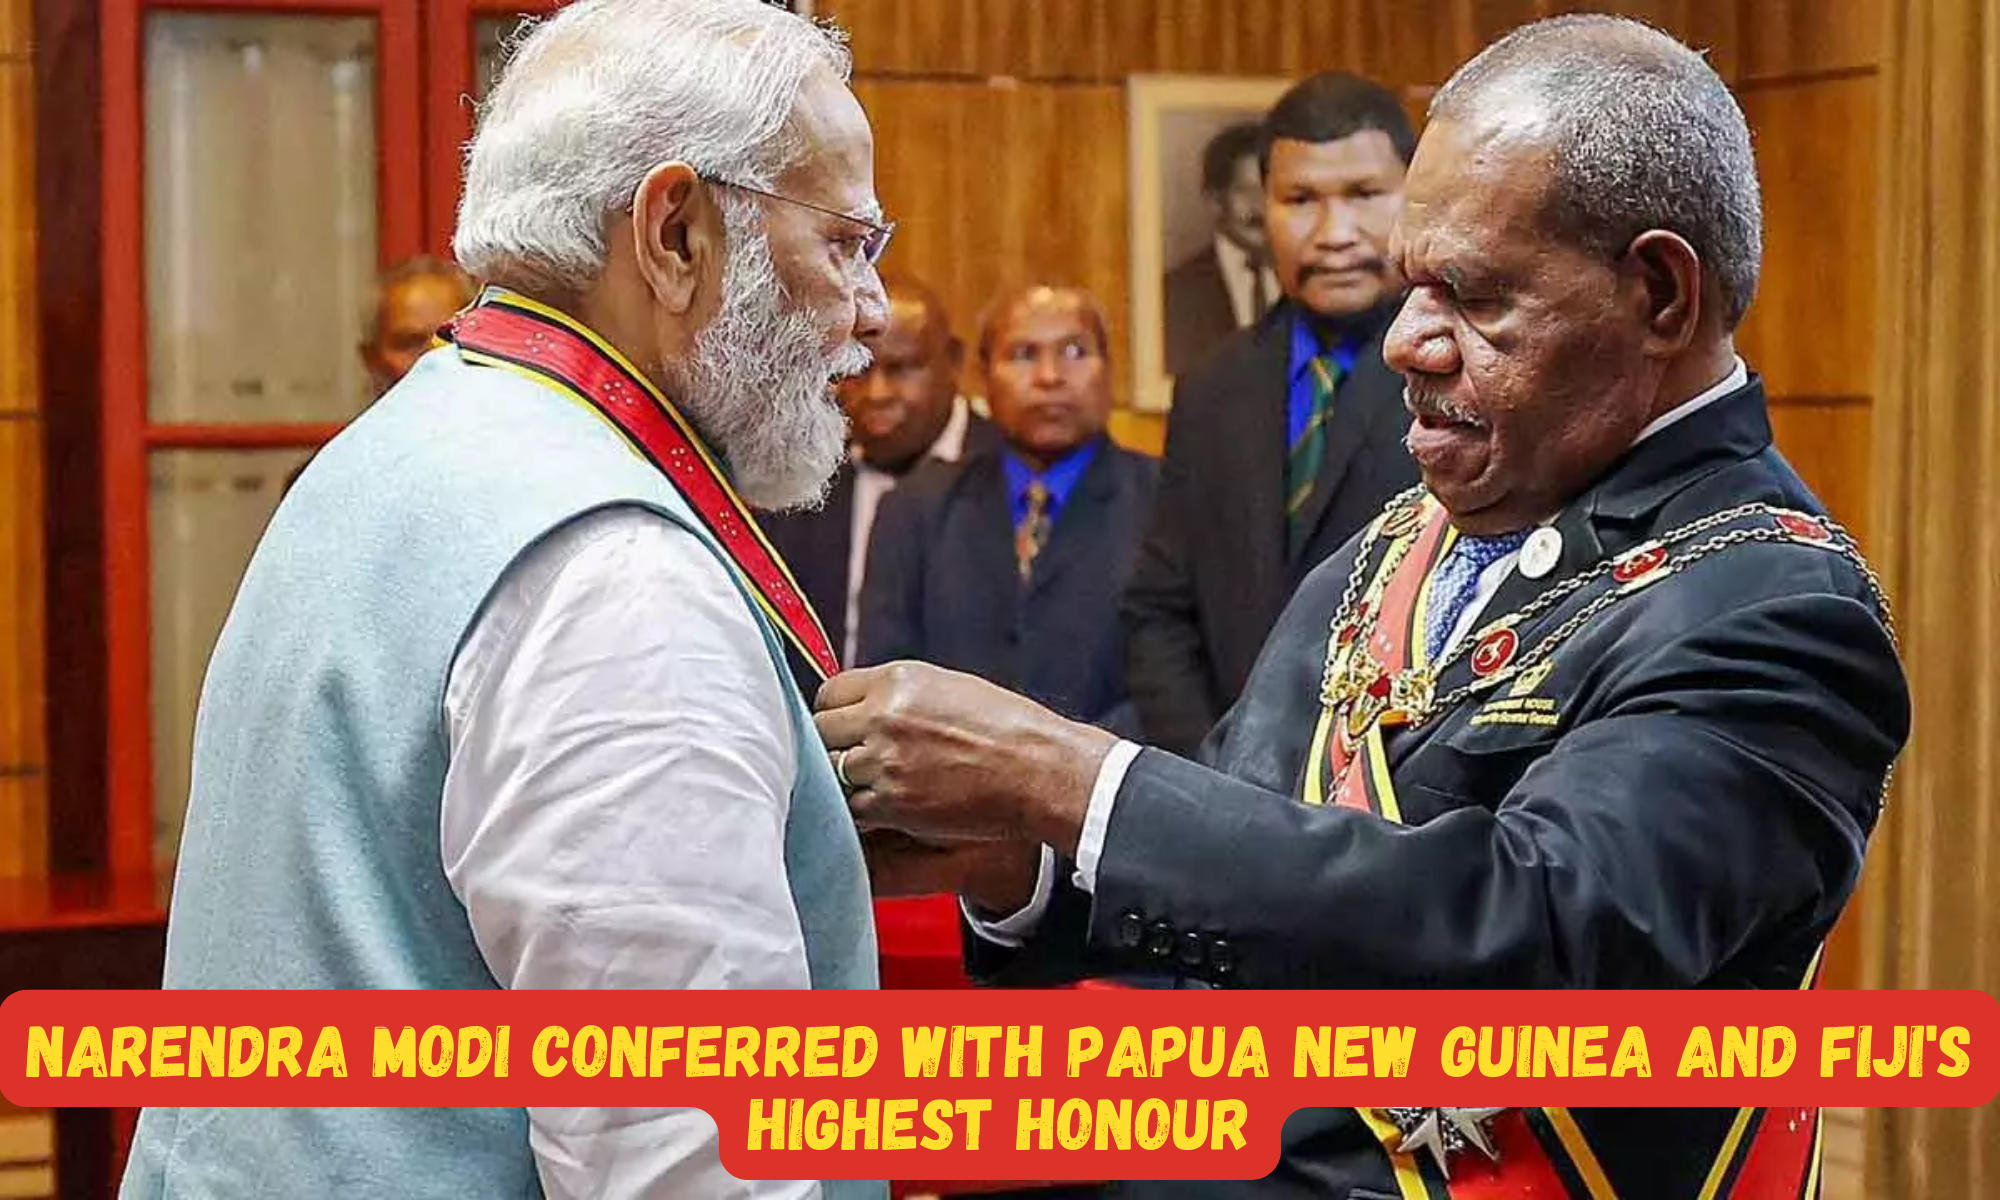 Narendra Modi conferred with Papua New Guinea and Fiji's highest honour